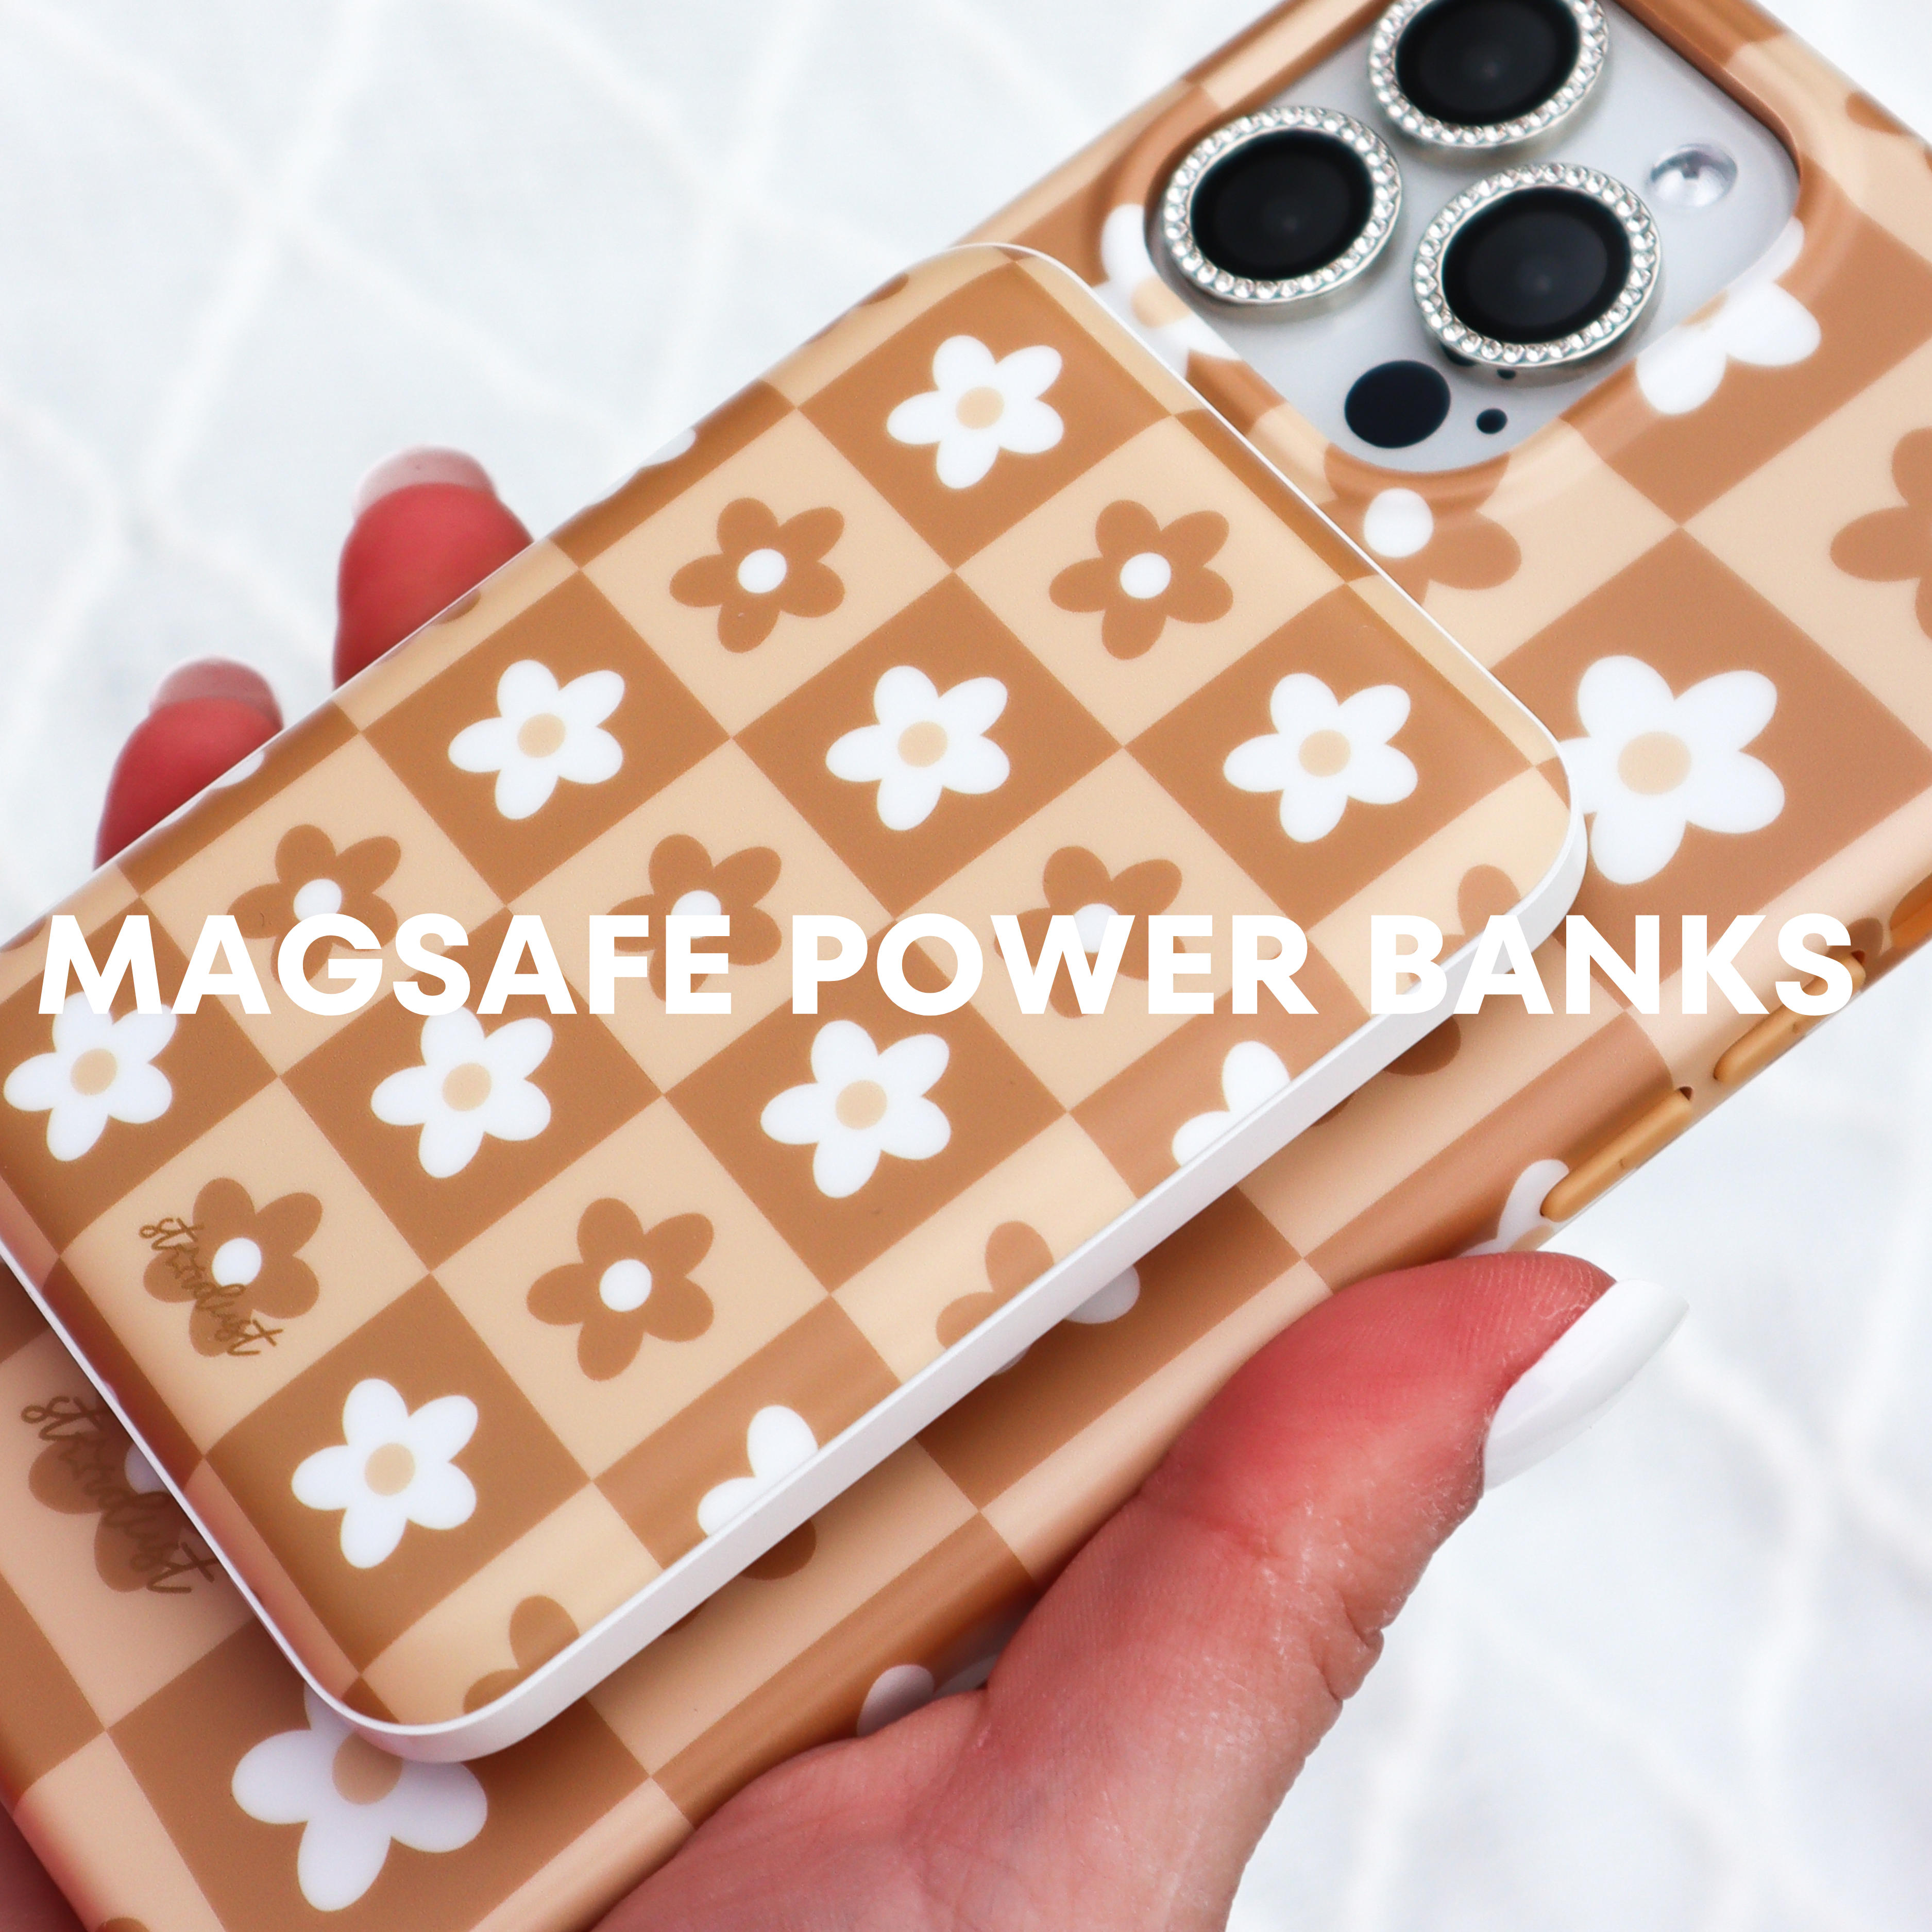 MagSafe Power Banks